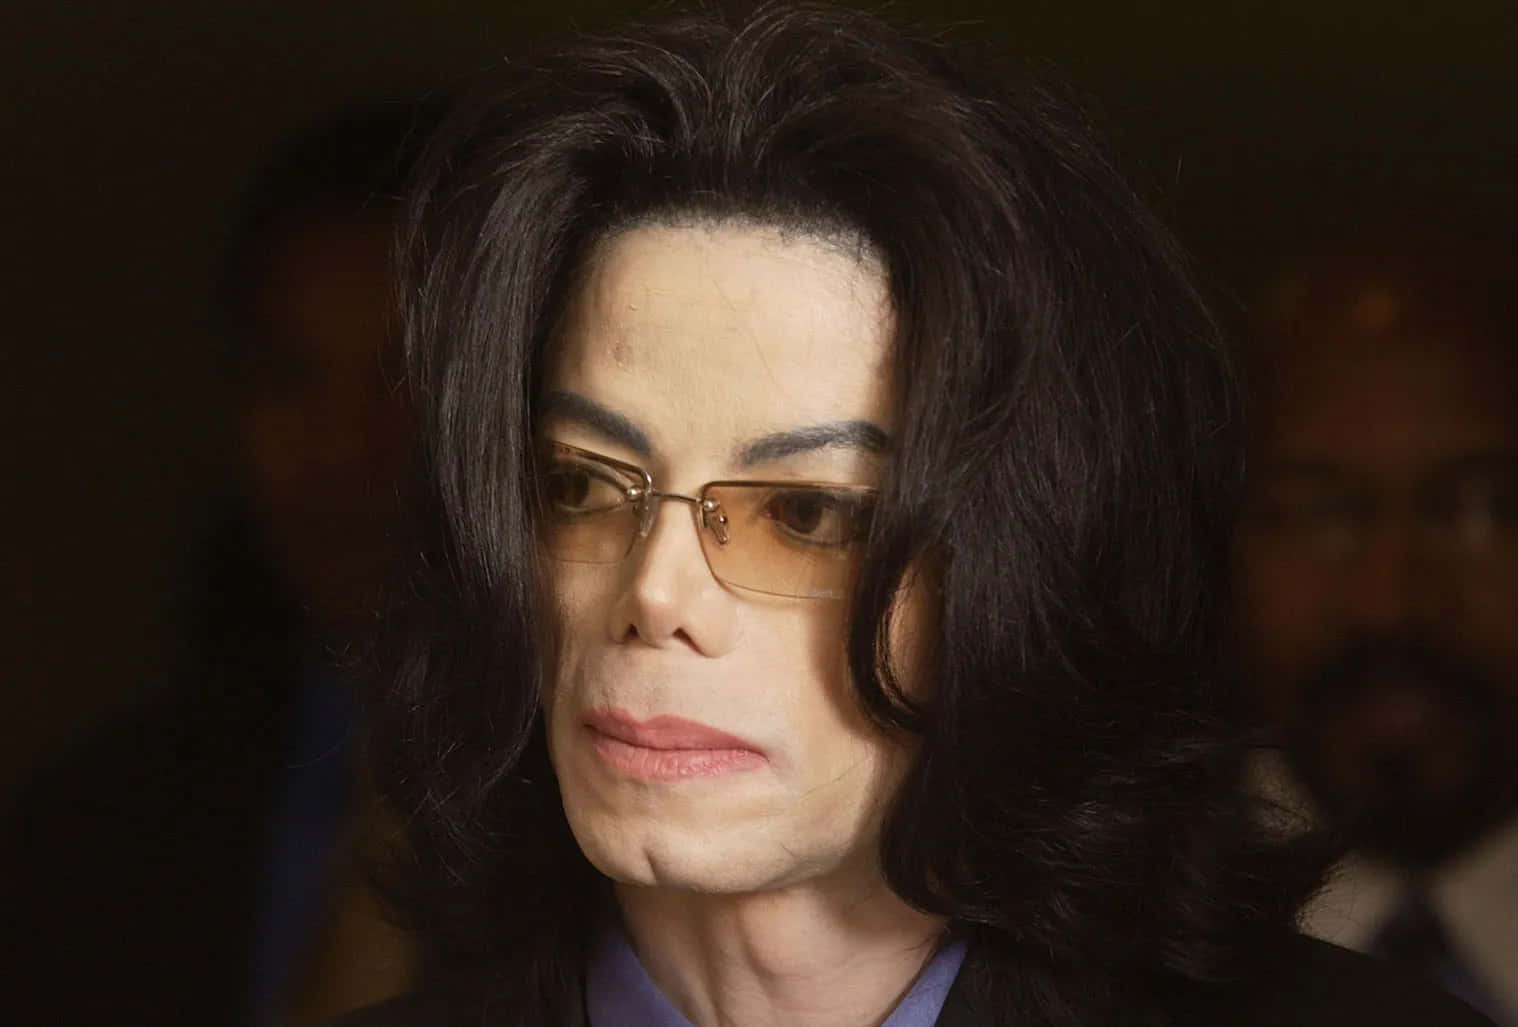 Michael Jackson Serious Expression